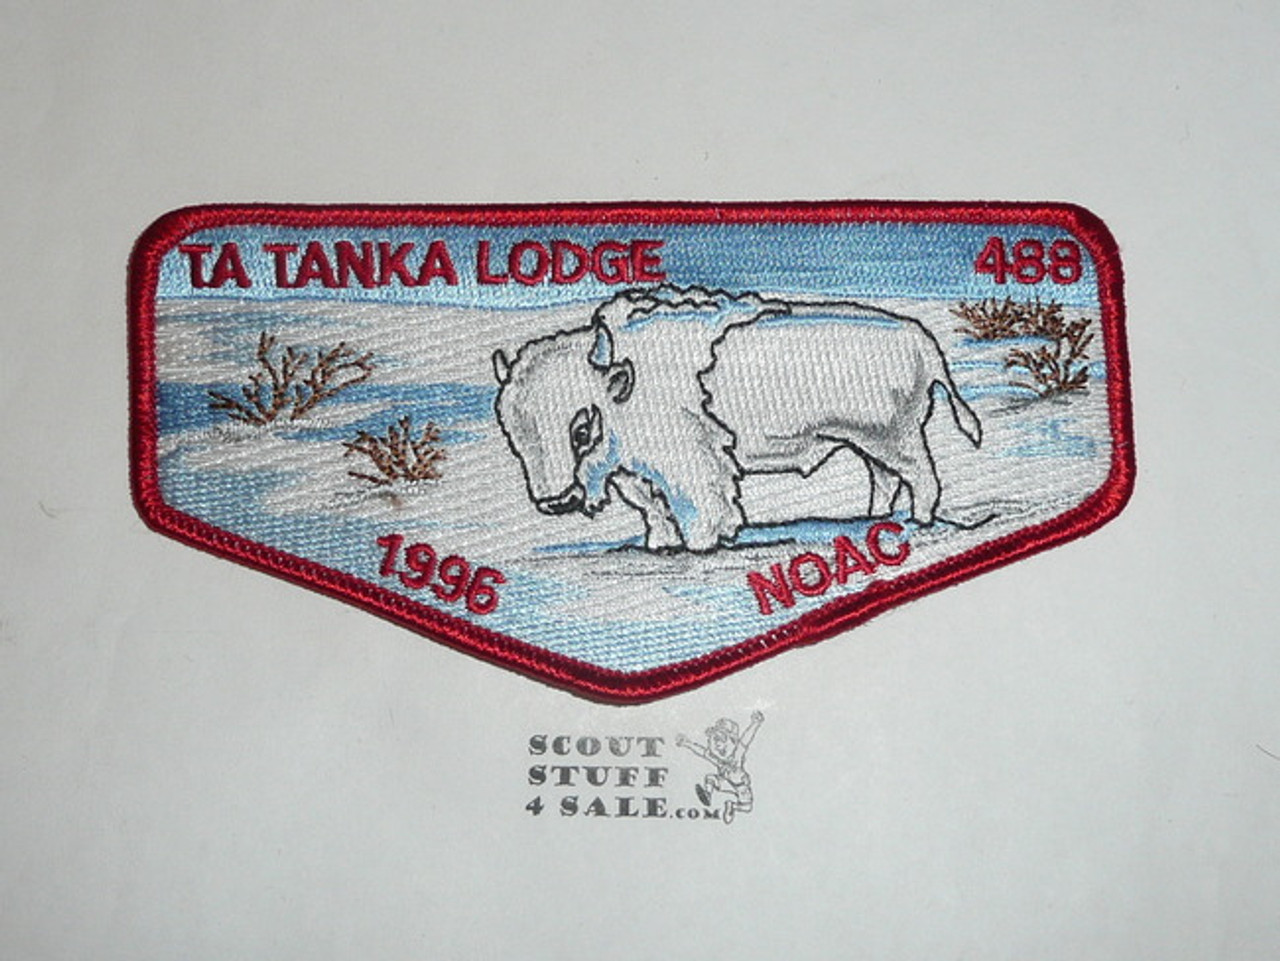 Order of the Arrow Lodge #488 Ta Tanka s34 1996 NOAC Flap Patch